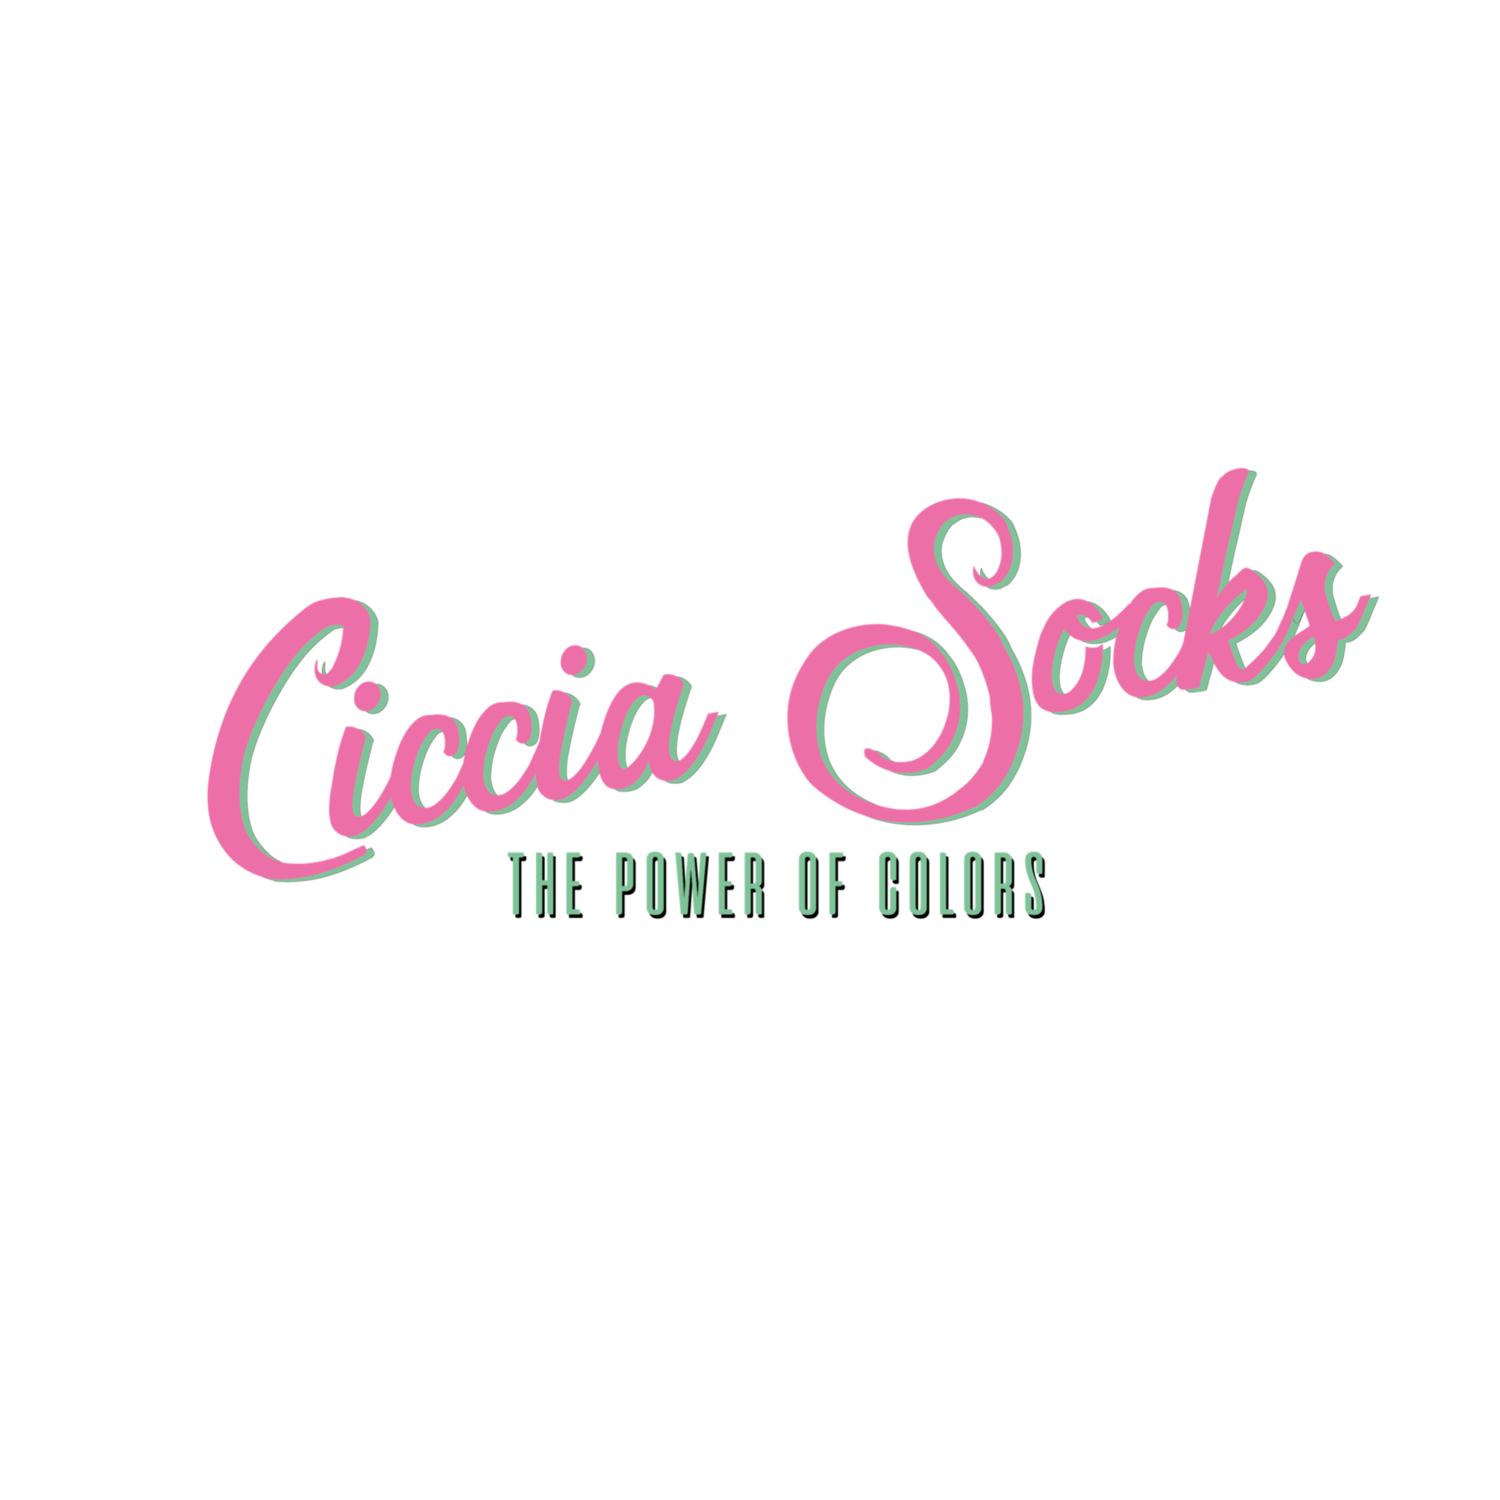 Ciccia Socks